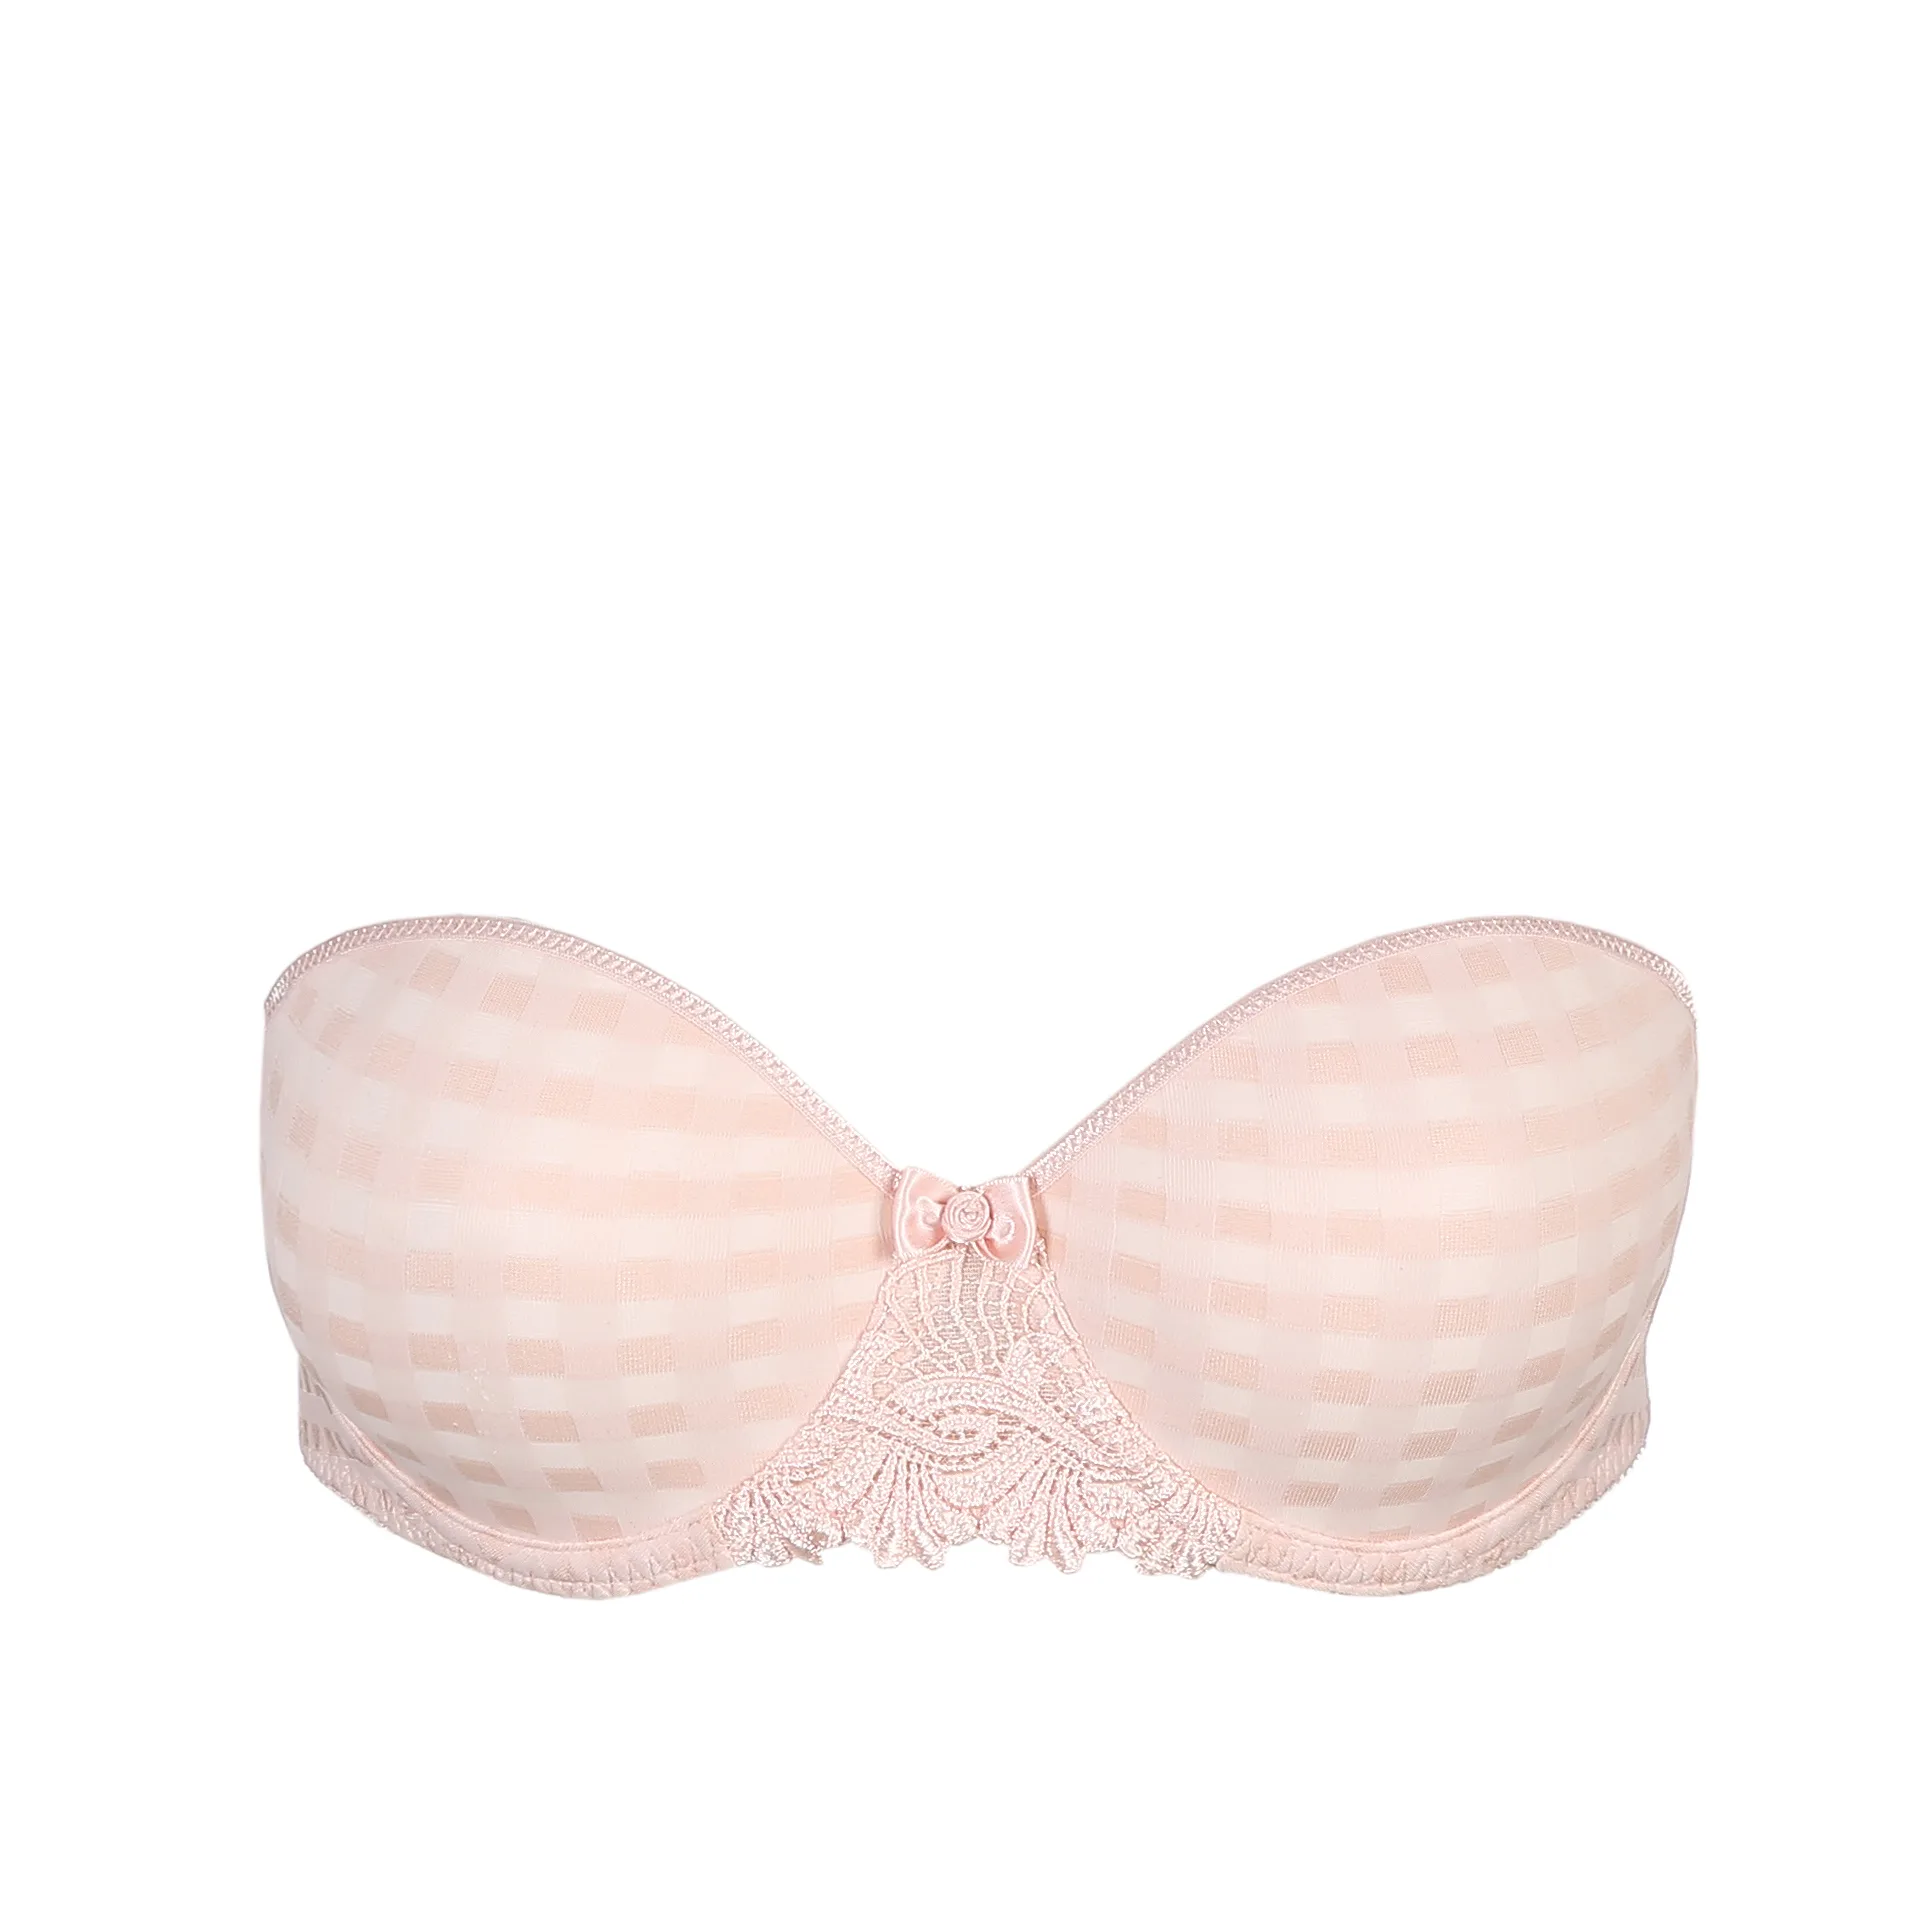 Marie Jo AVERO pearly pink padded bra strapless